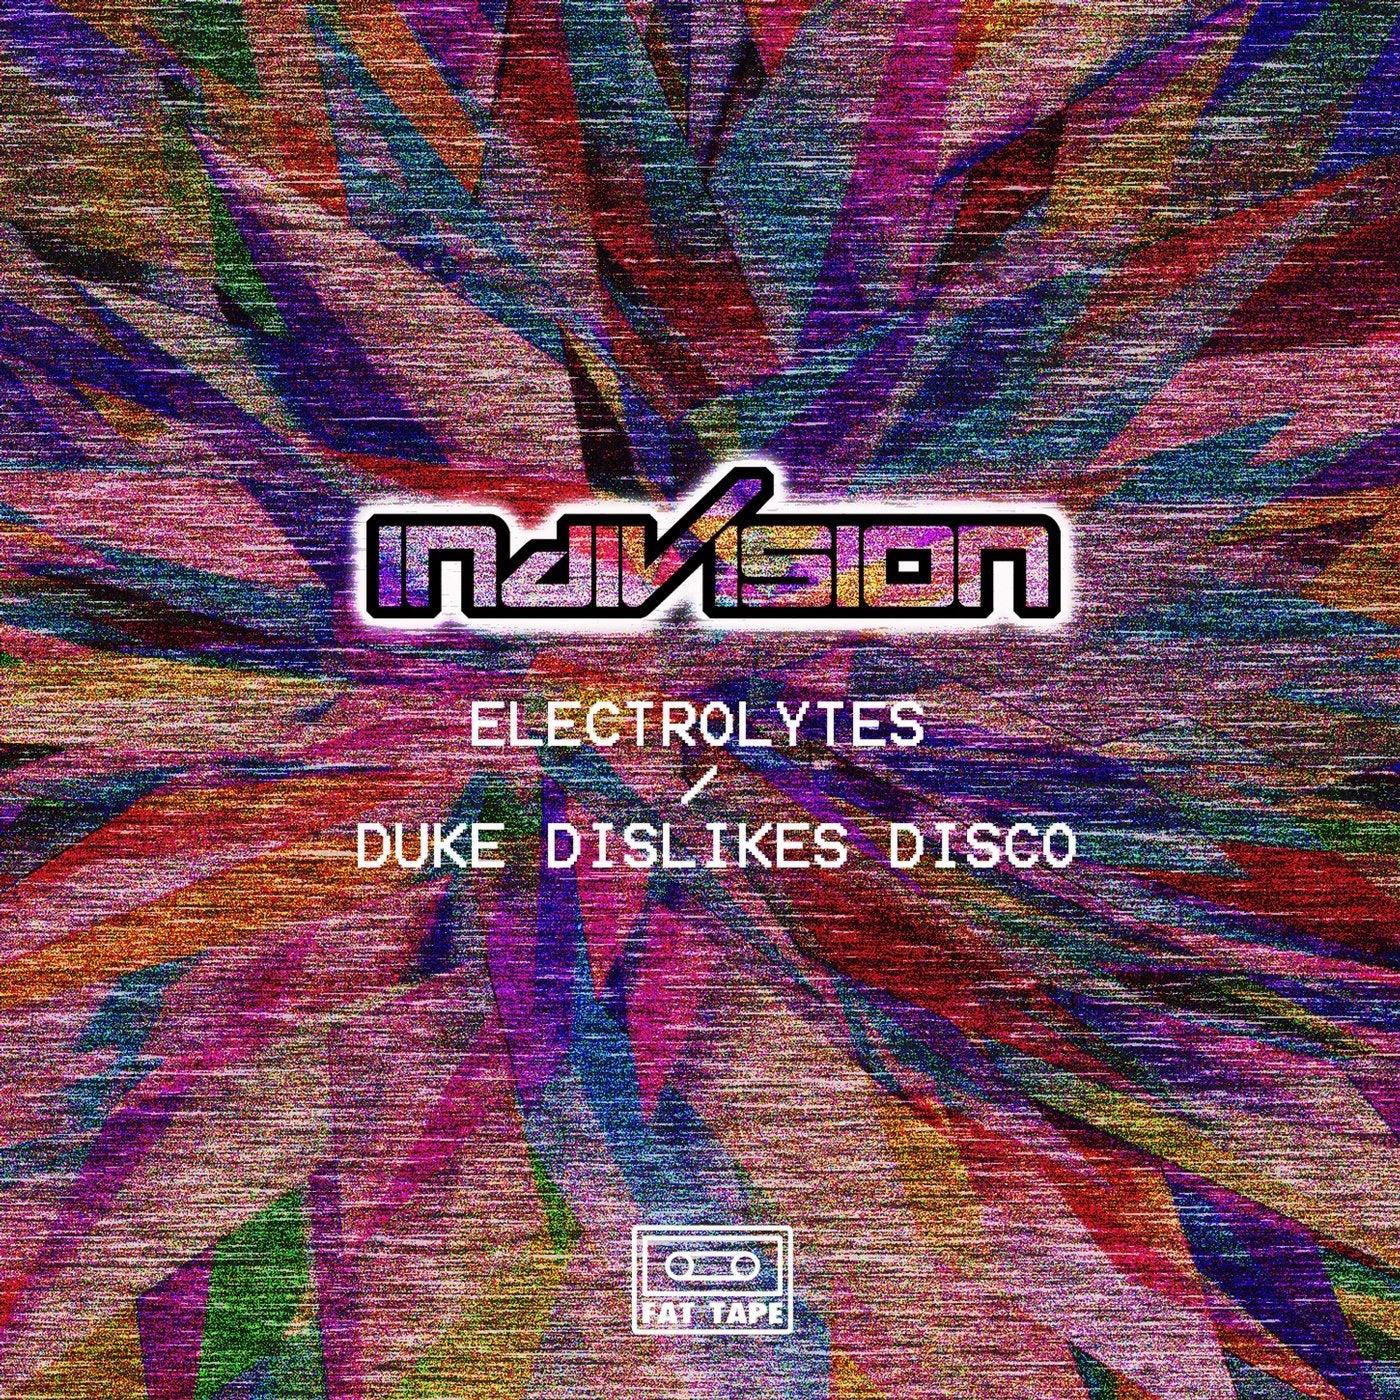 Electrolytes / Duke Dislikes Disco